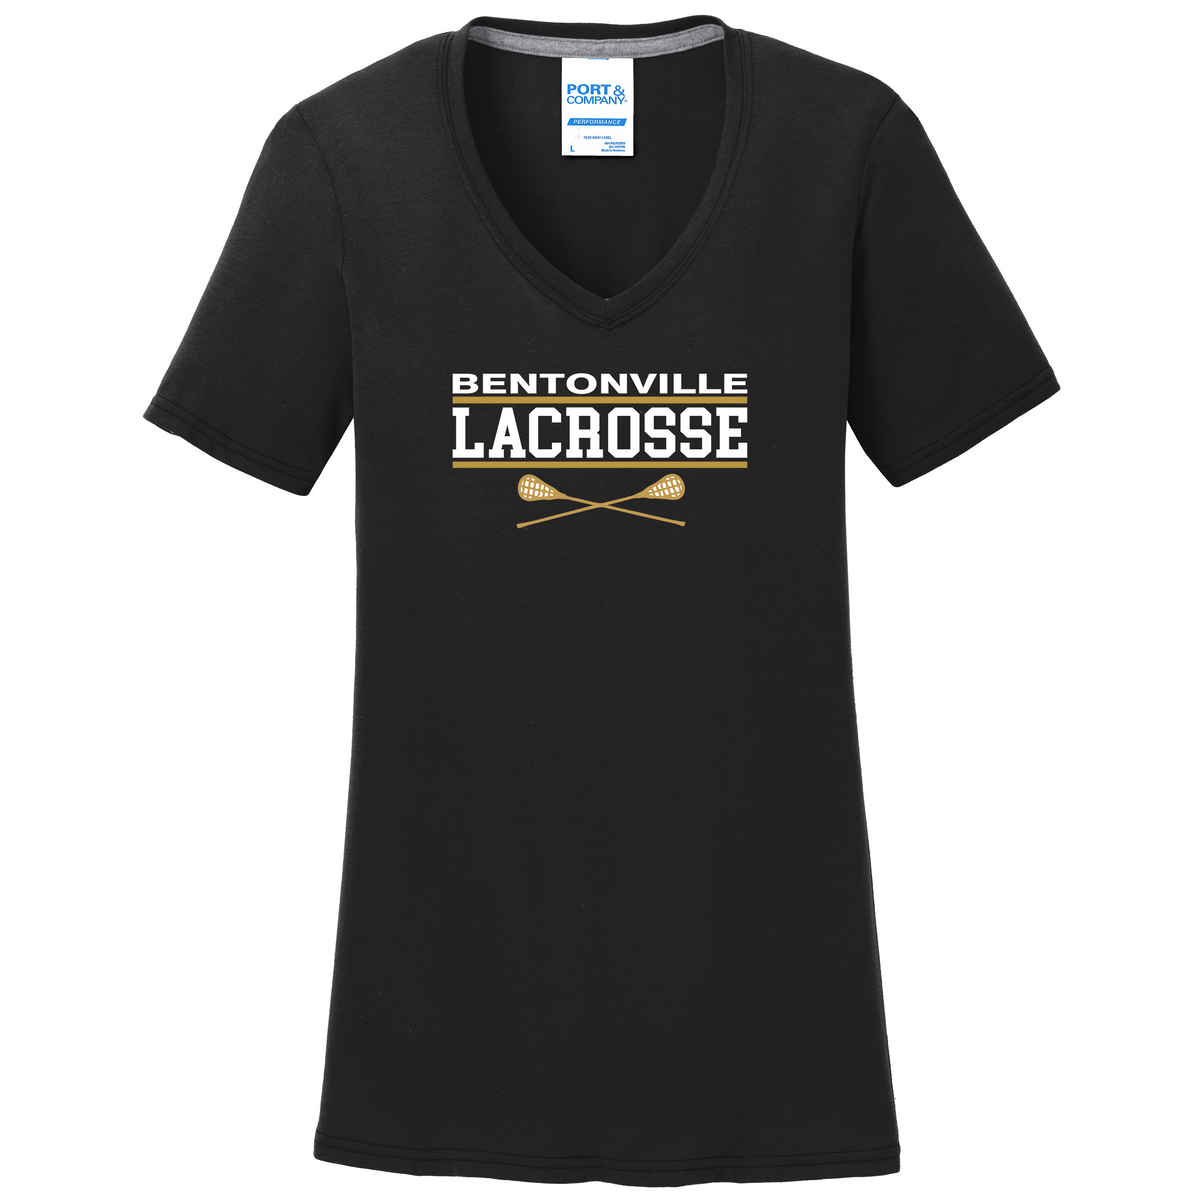 Bentonville Lacrosse Women's T-Shirt